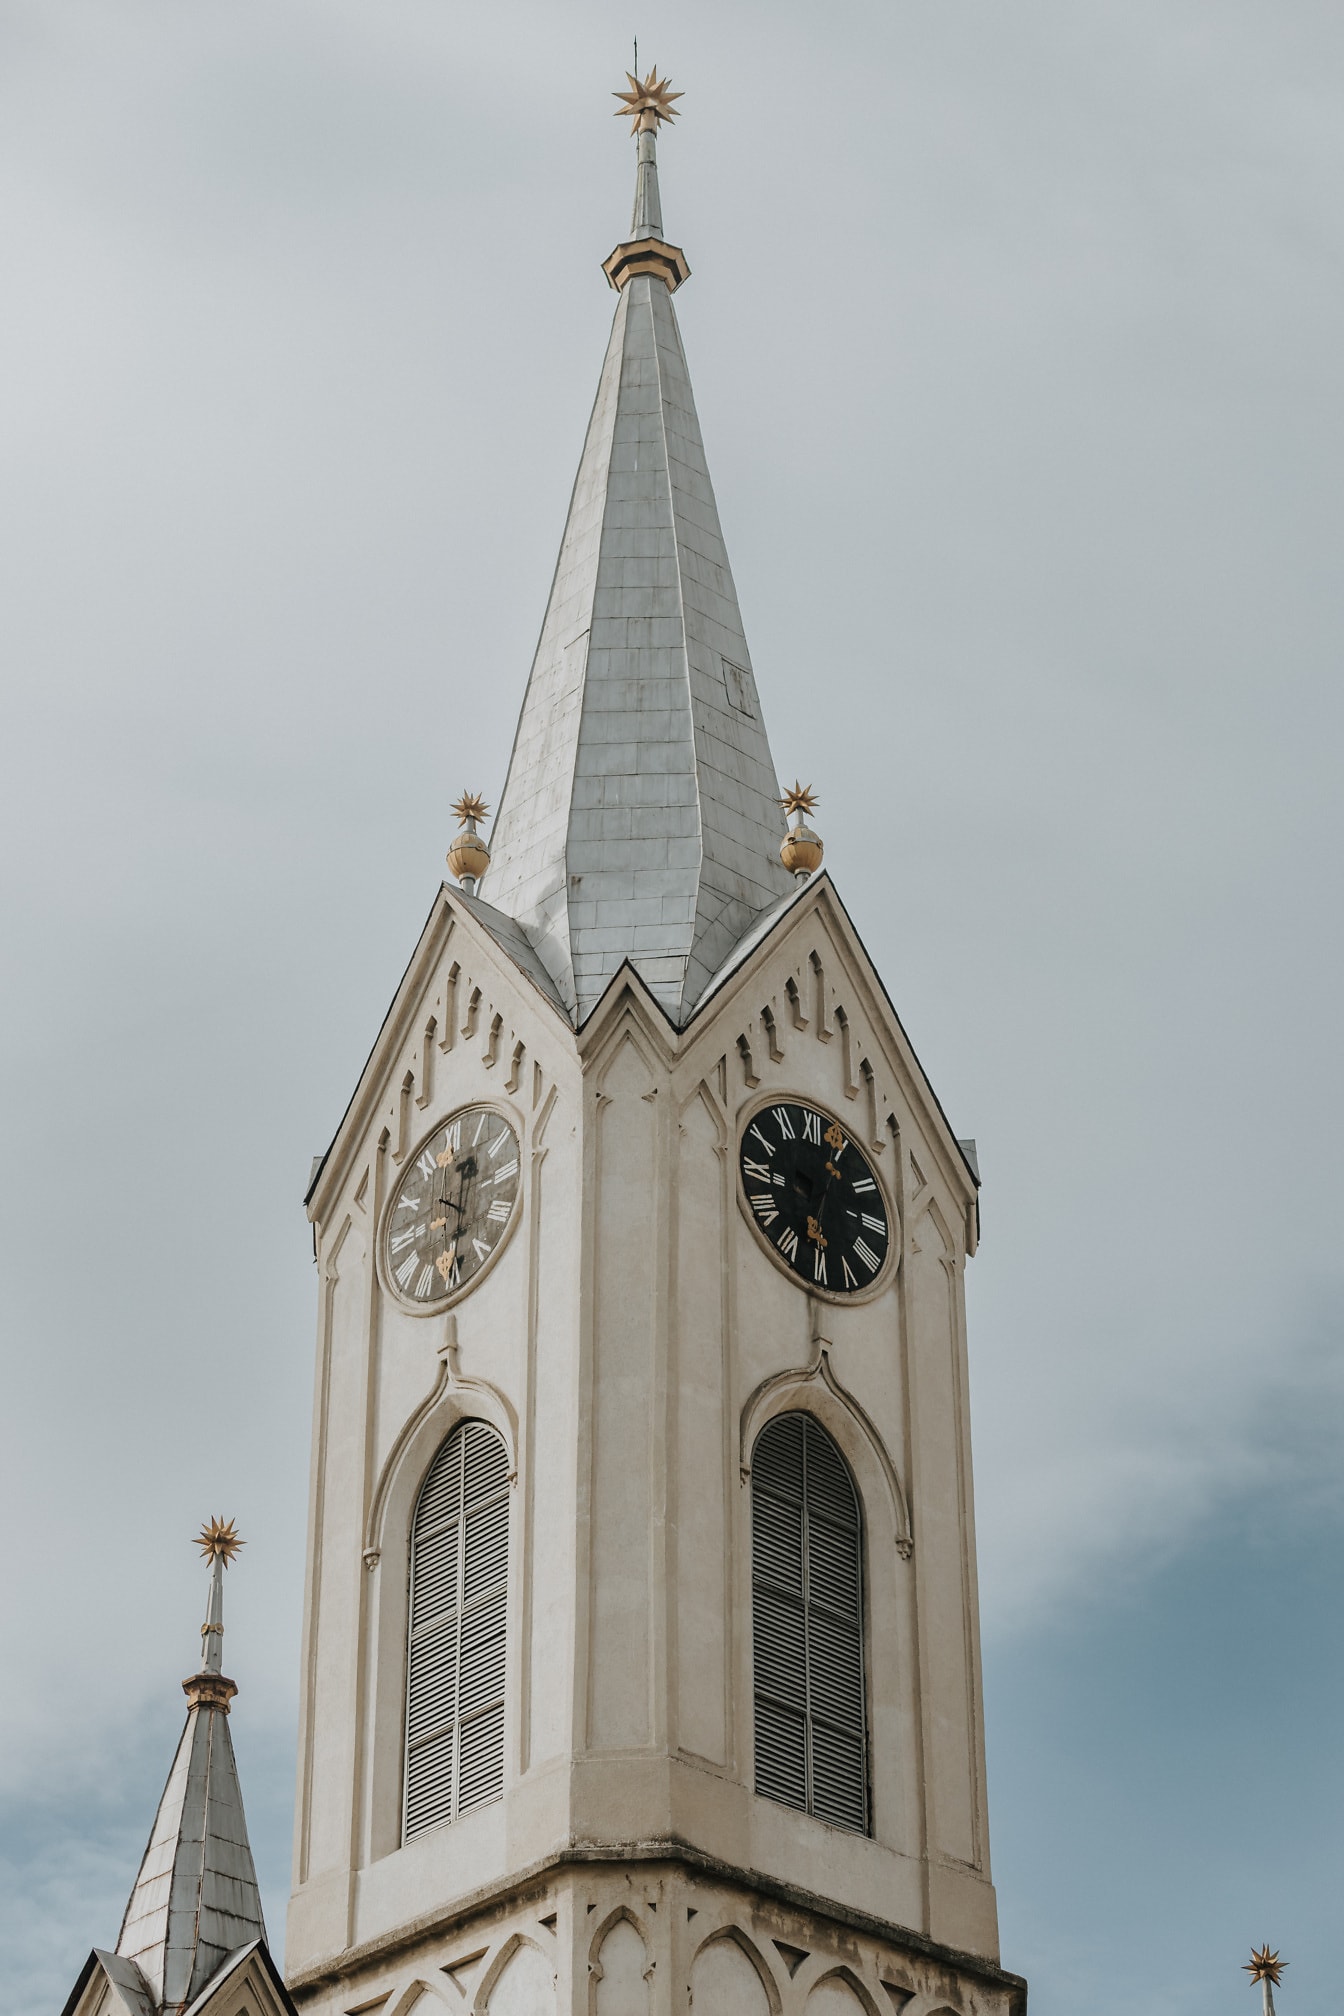 Torre da igreja cristã da reforma com relógio analógico